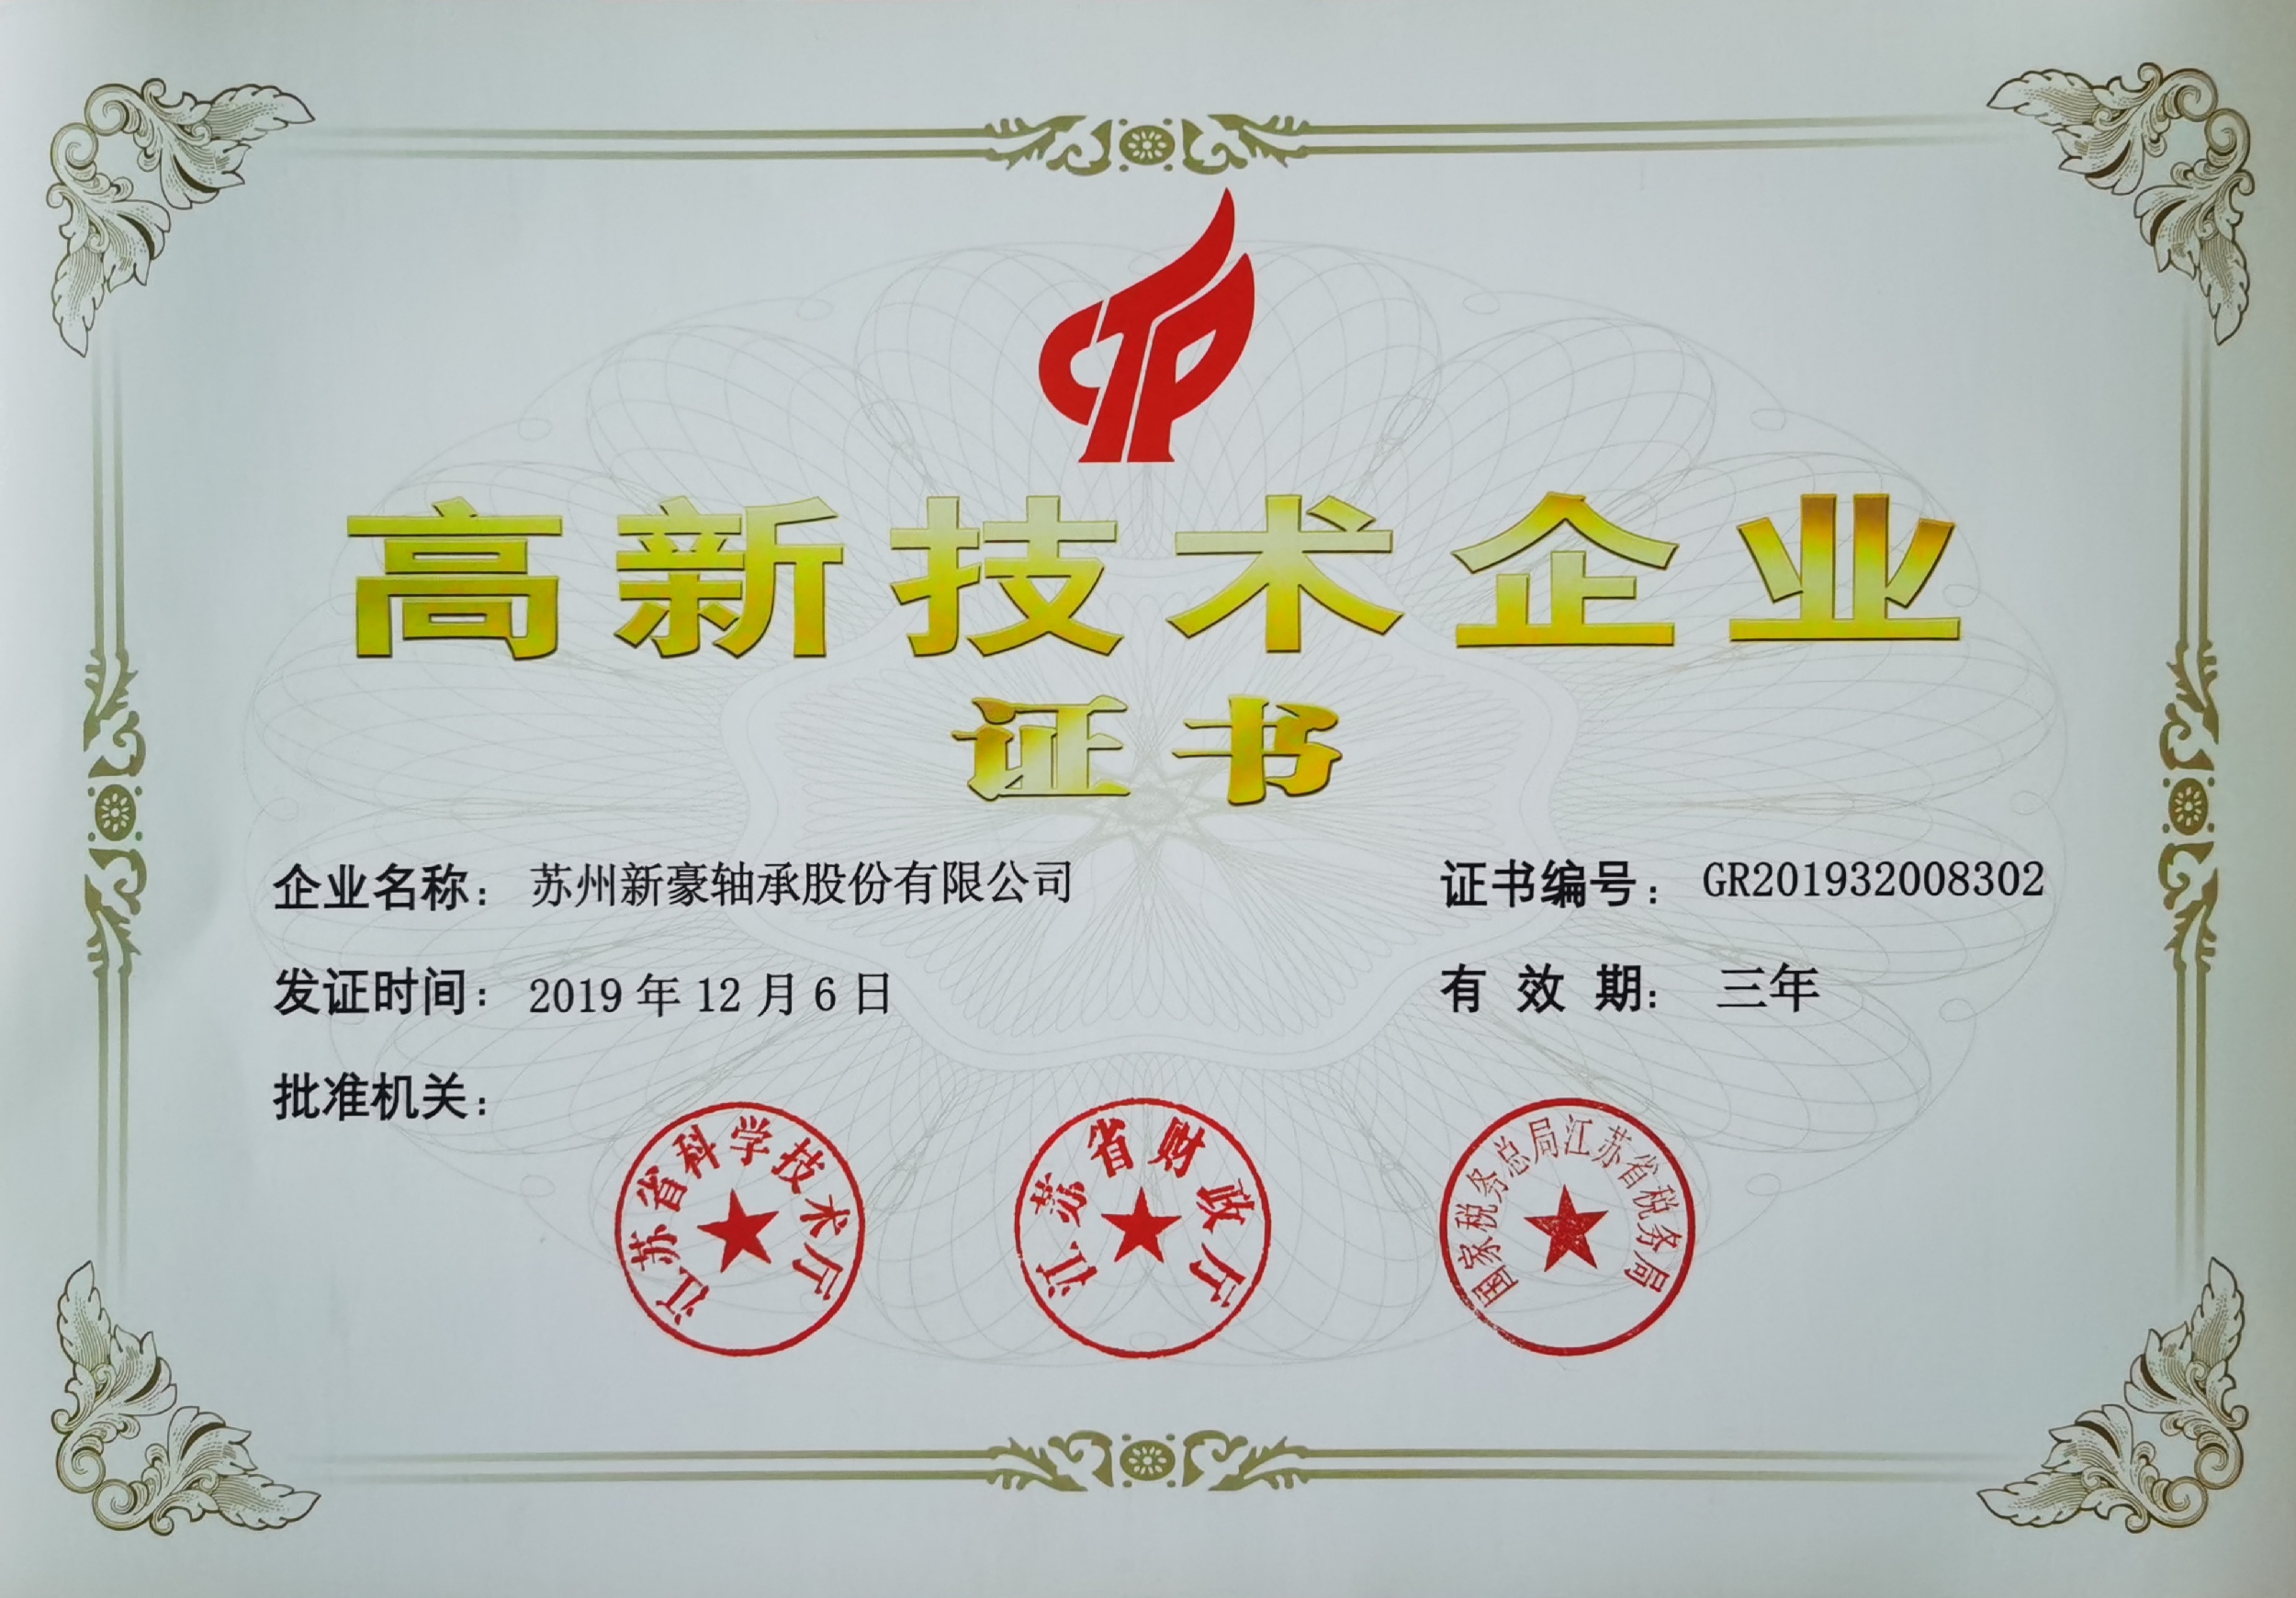 2019 China National High-tech Enterprise Certification